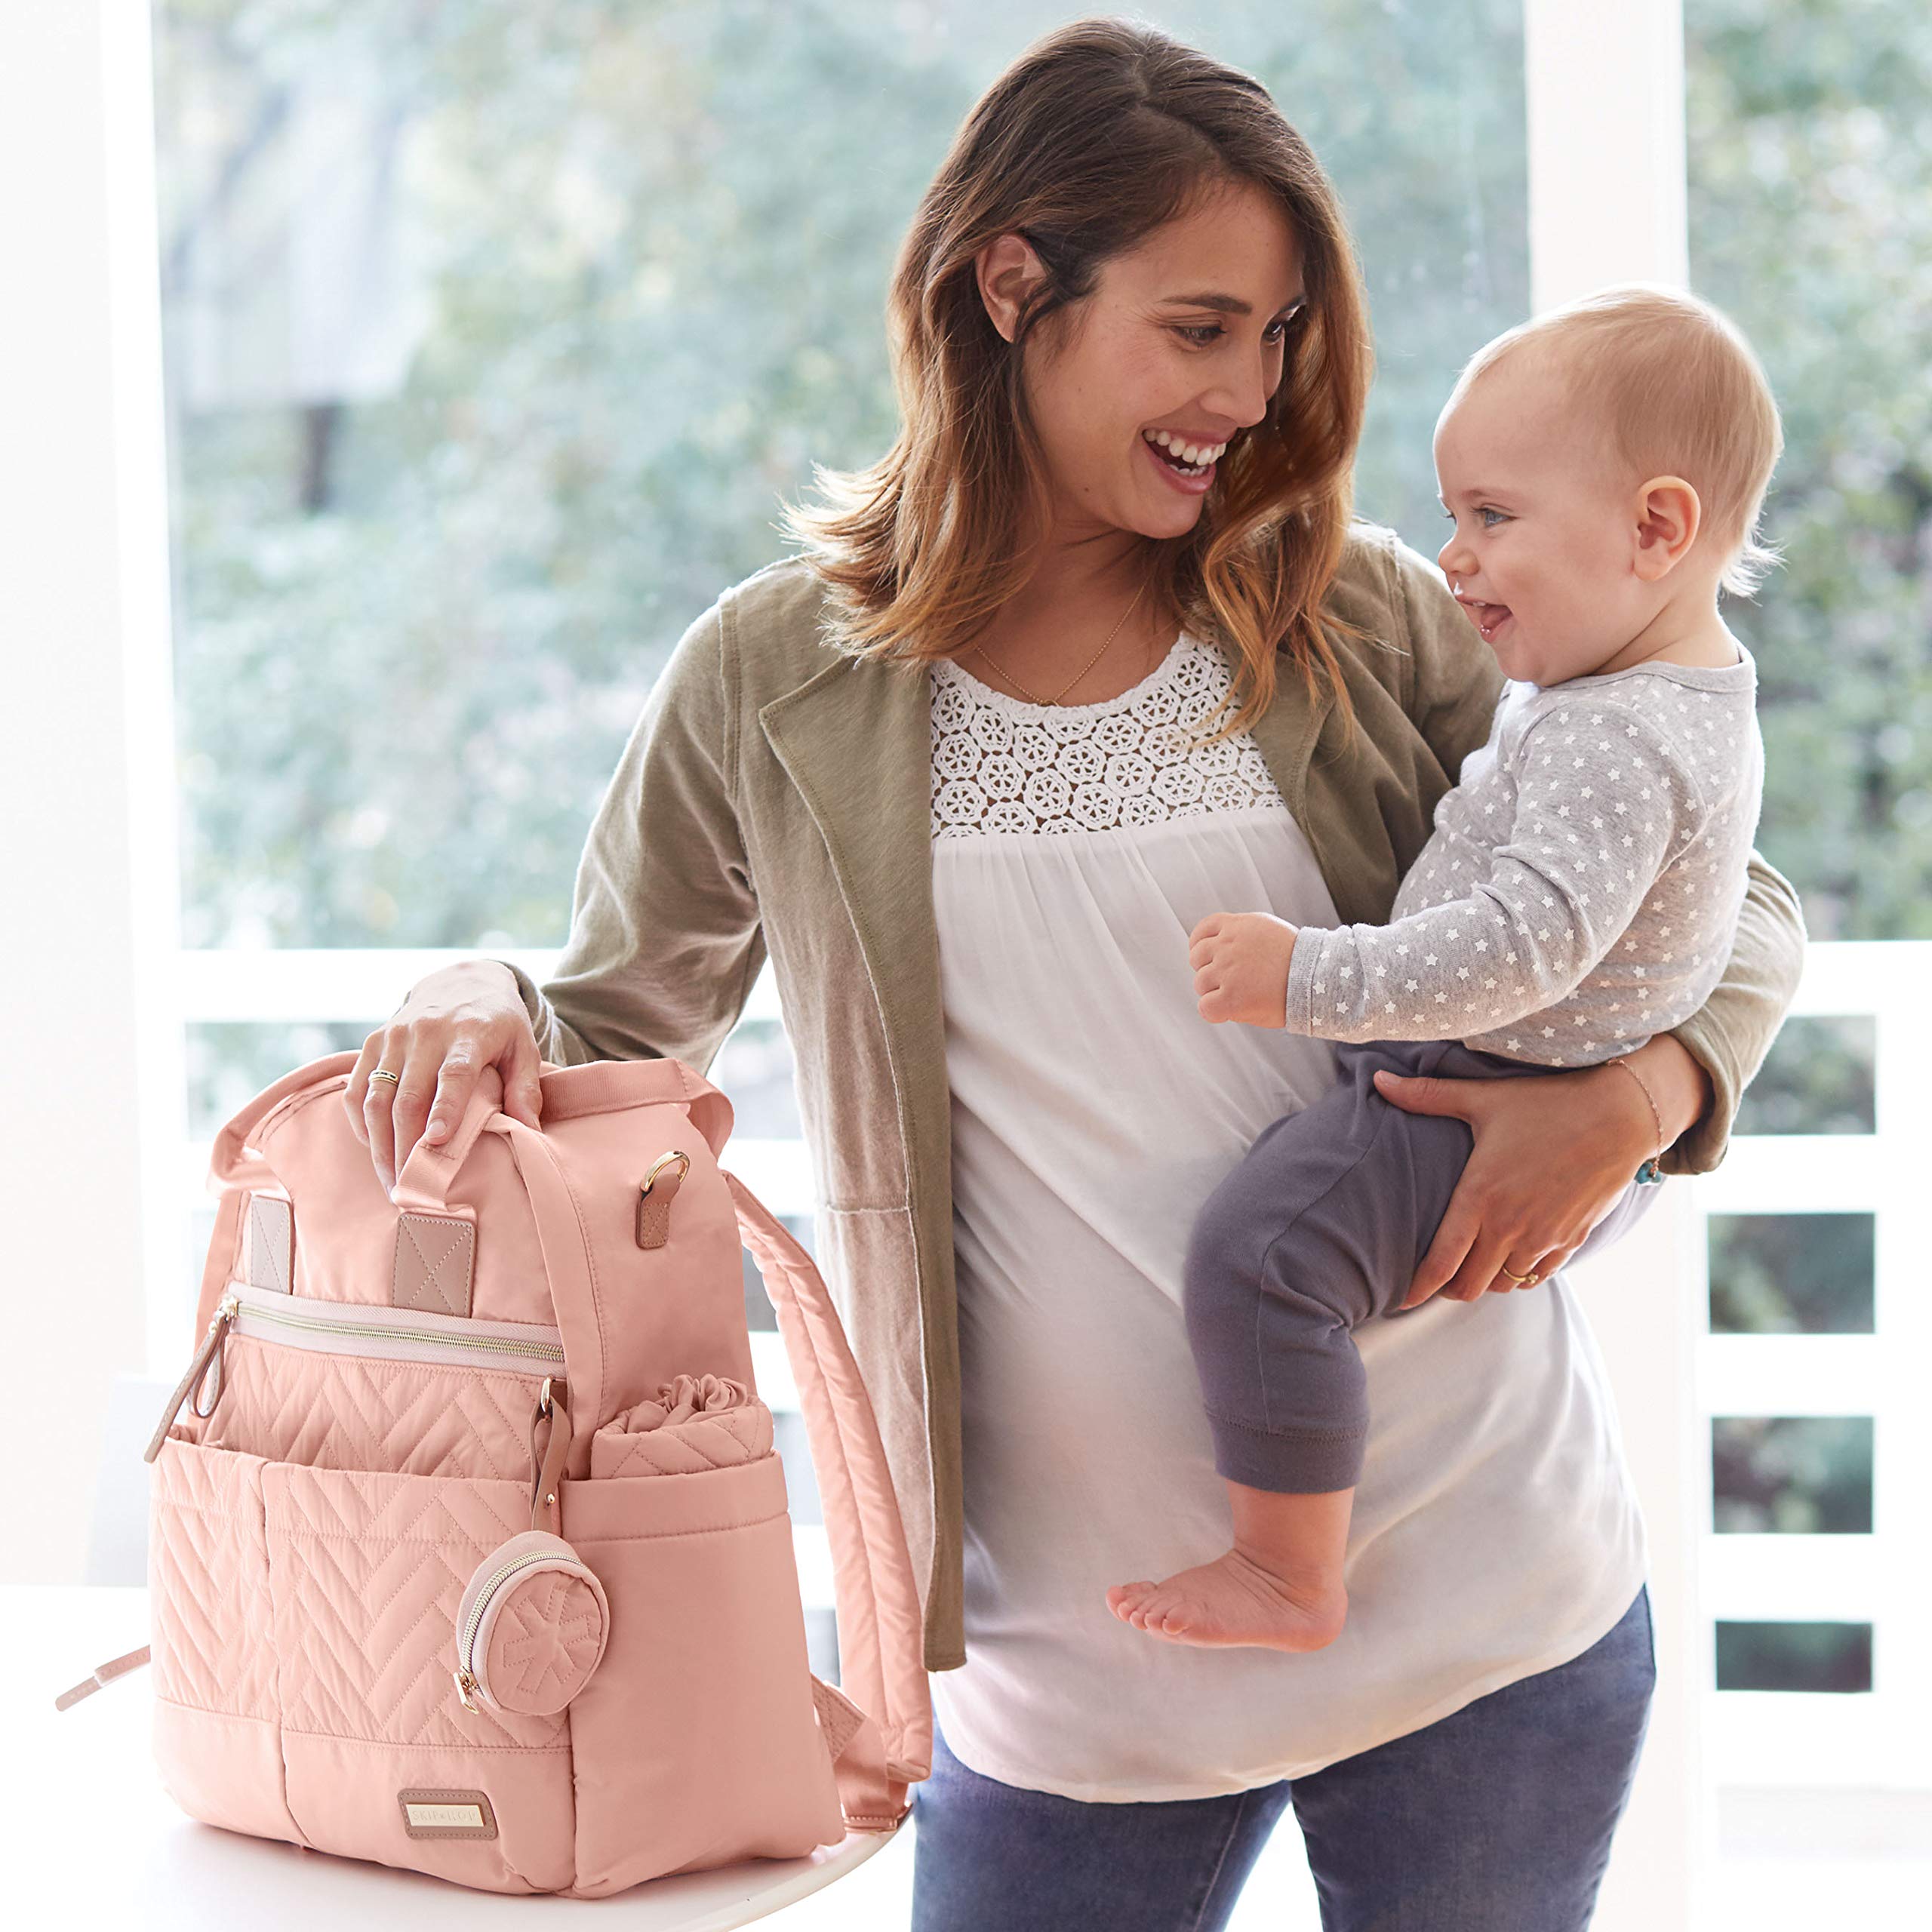 Skip Hop Diaper Bag Backpack: Suite 6-in-1 Diaper Backpack Set, Multi-Function Baby Travel Bag with Changing Pad, Stroller Straps, Bottle Bag and Pacifier Pocket, Blush